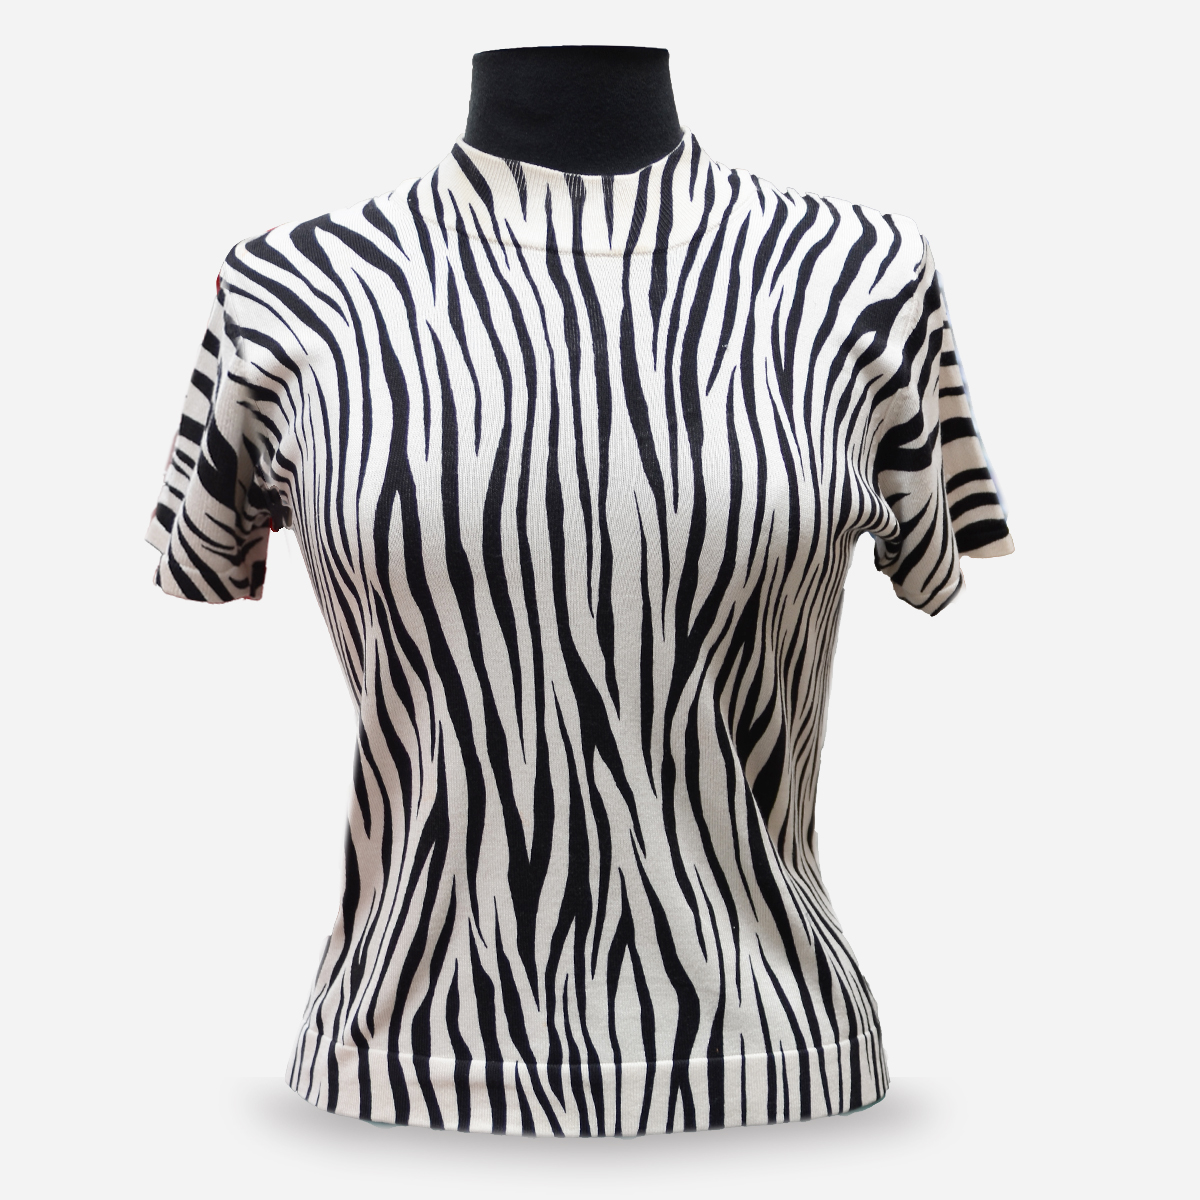 Silk knit top, zebra print